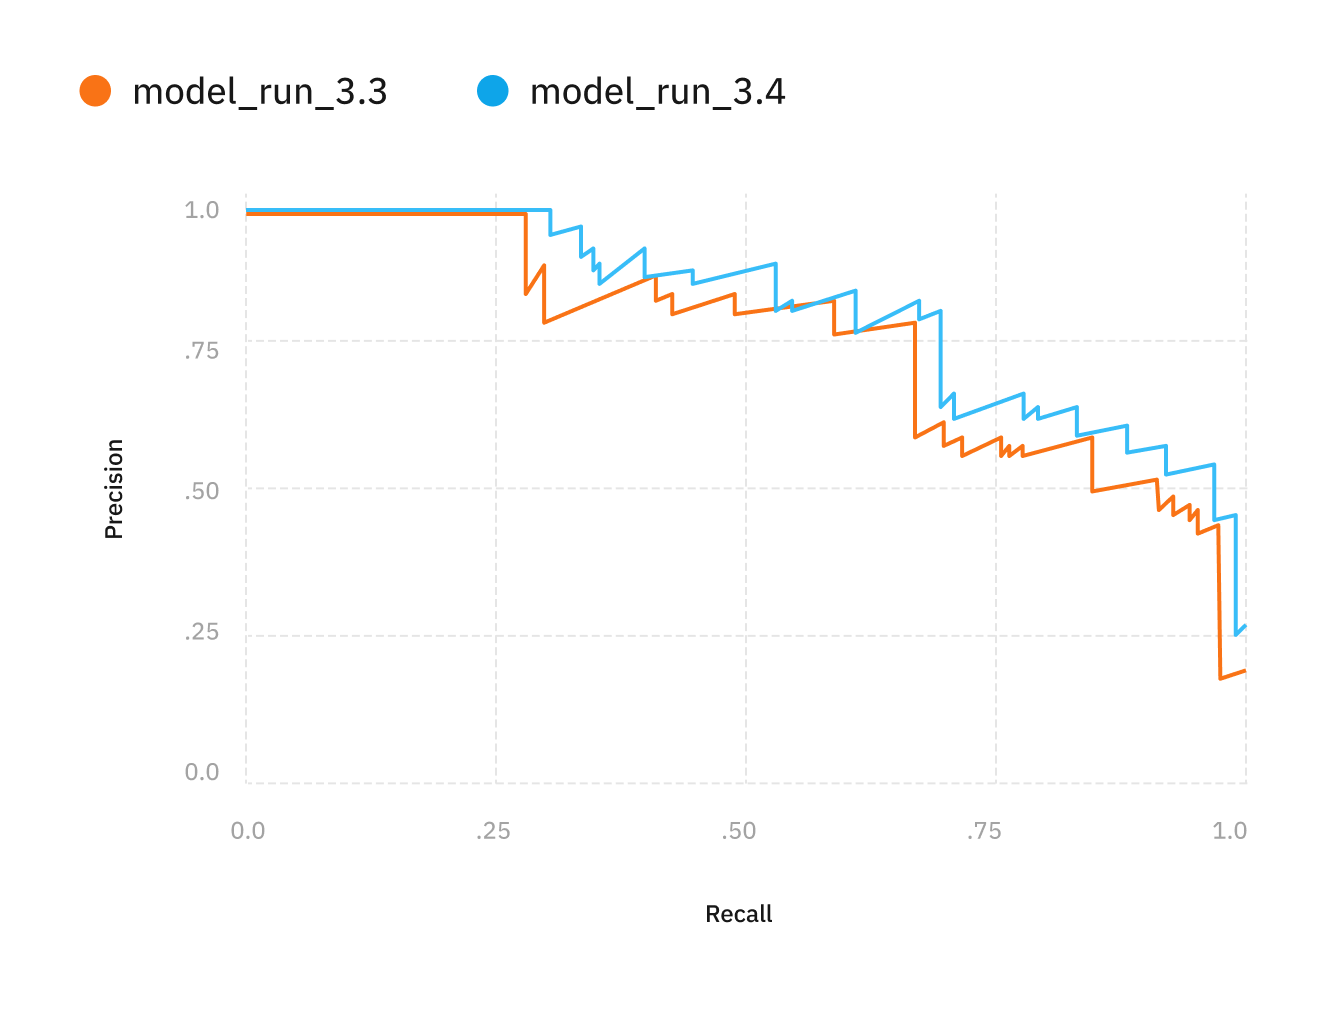 Track essential metrics across model versions